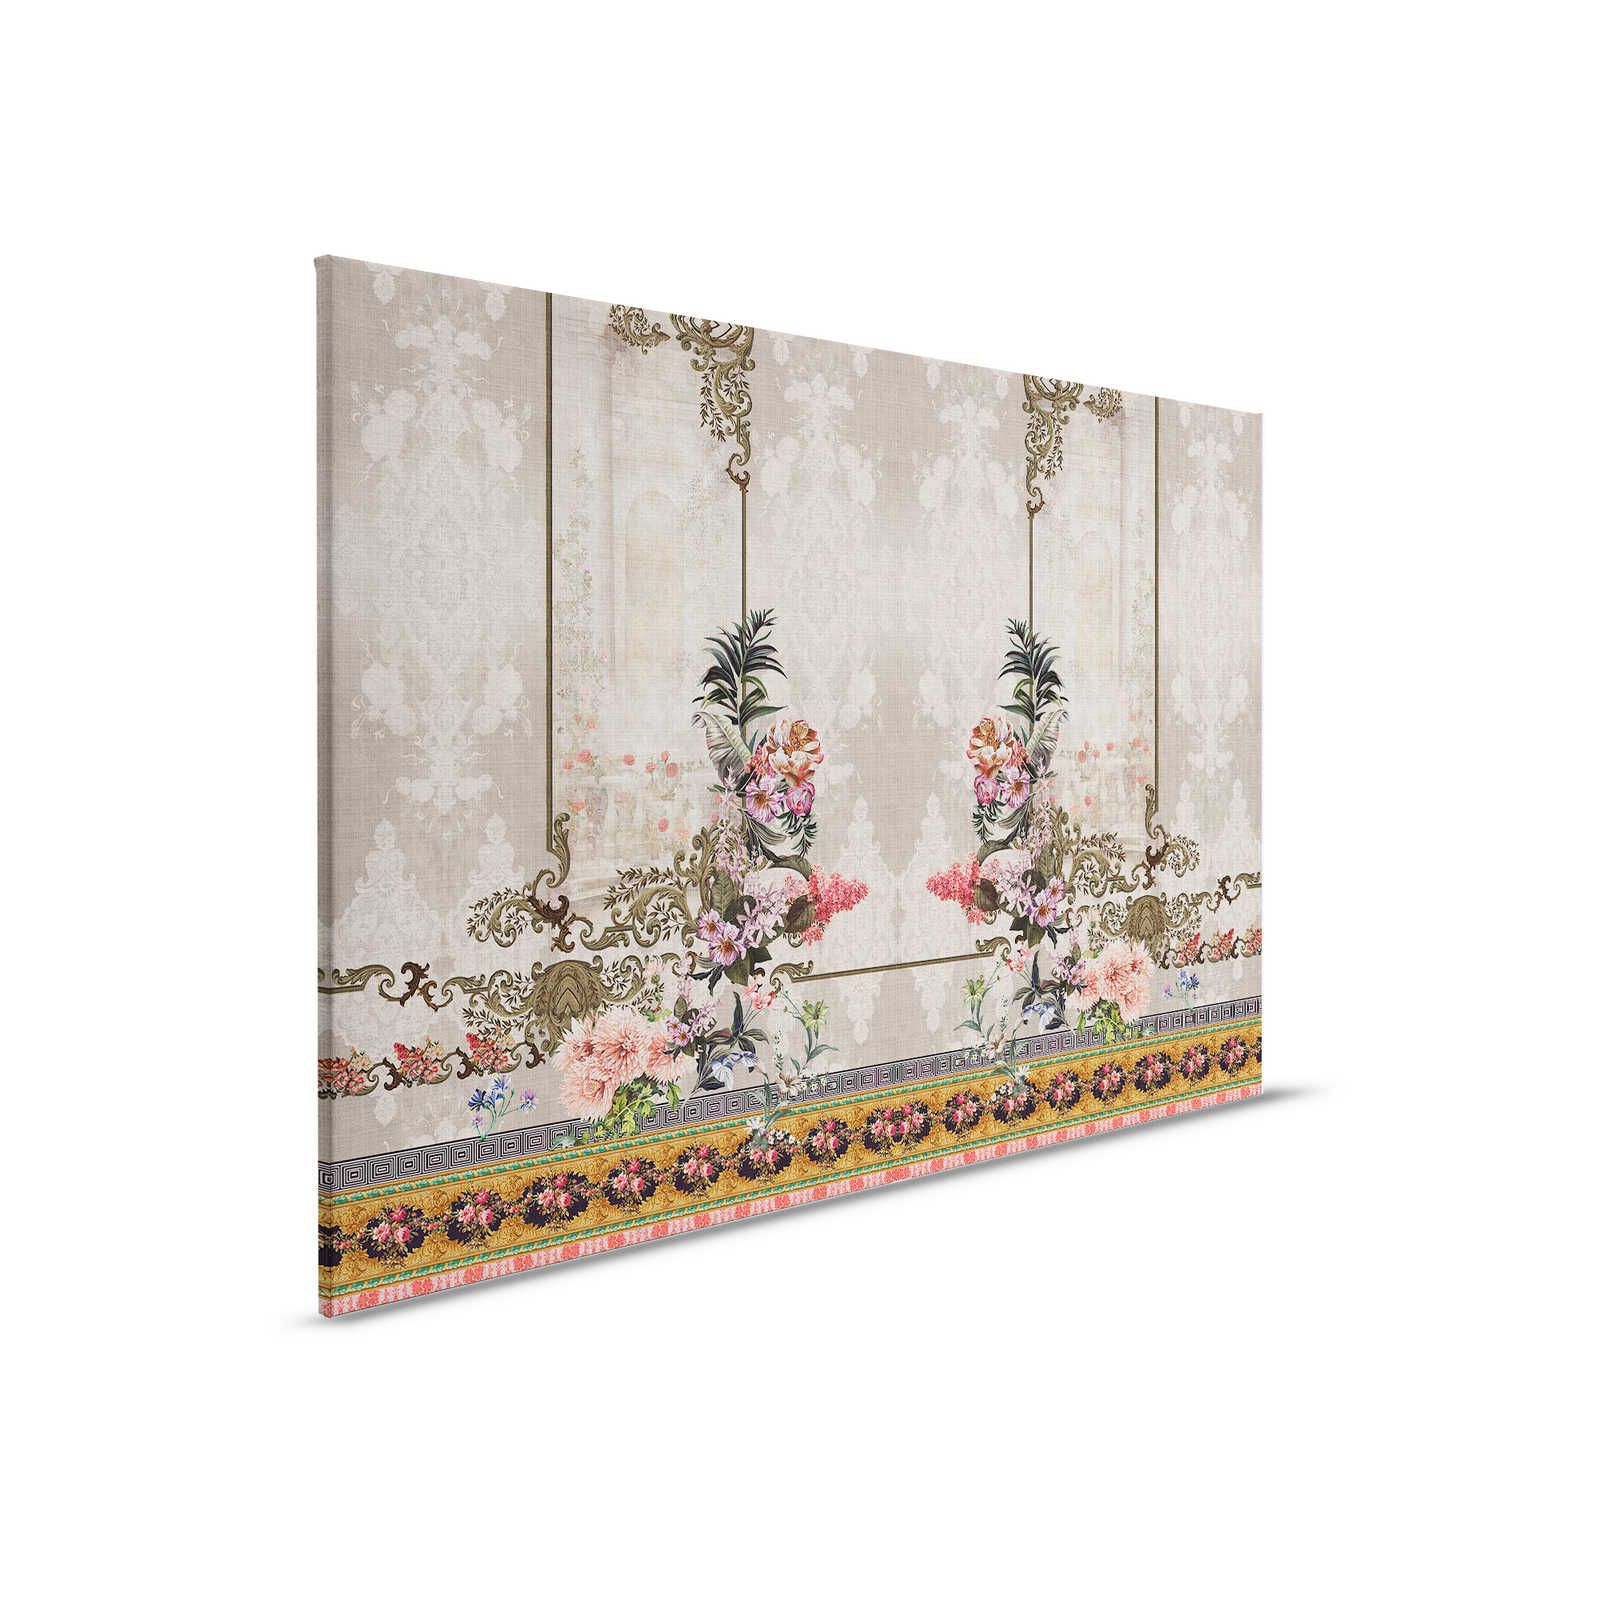 Oriental Garden 1 - Canvas painting Wall Decor Flowers & borders - 0,90 m x 0,60 m
